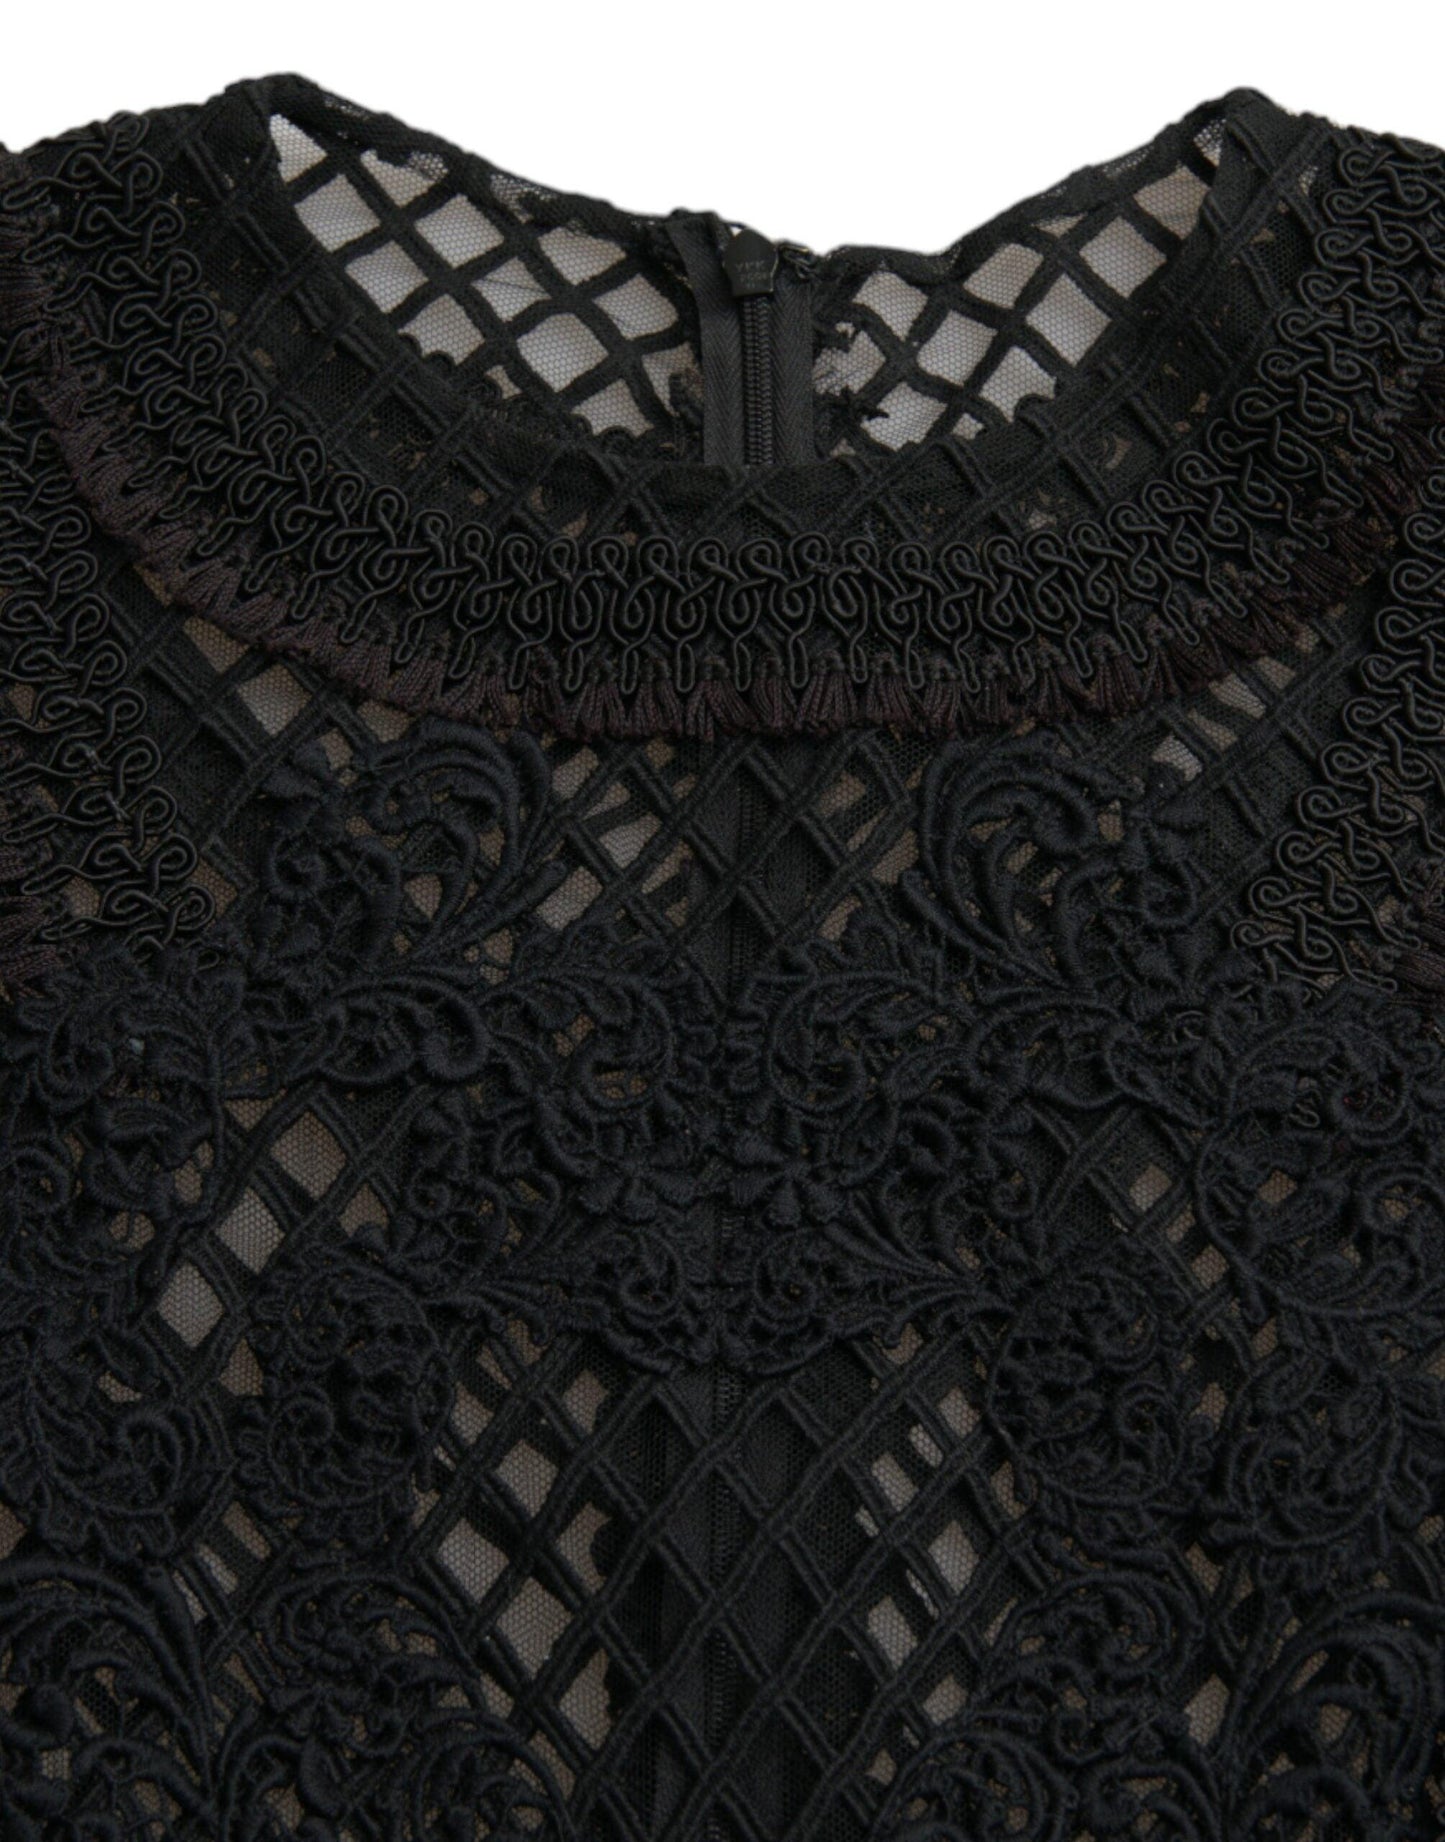 Dolce & Gabbana Black Sheer Long Sleeves Sheath Midi Dress - PER.FASHION